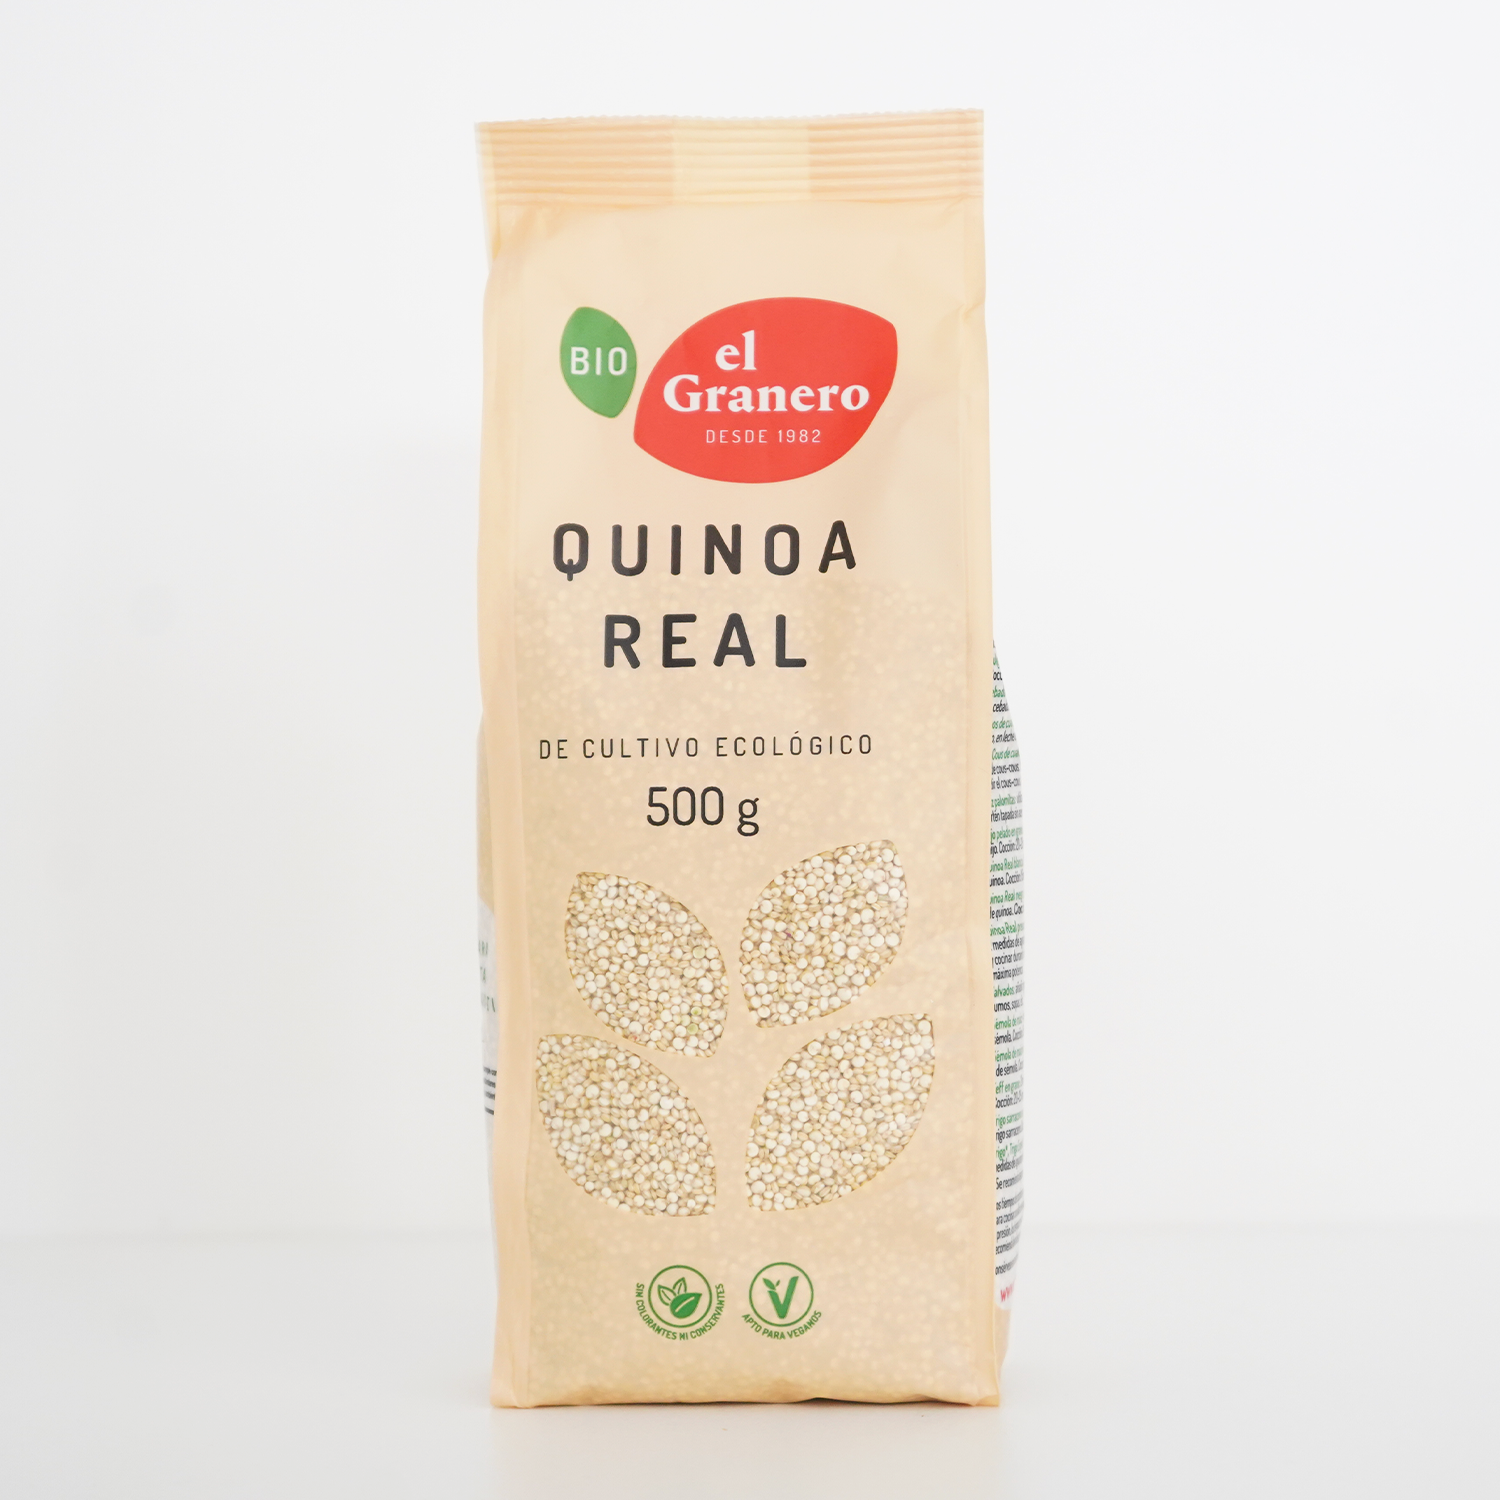 Paquete de quinoa real ecológica